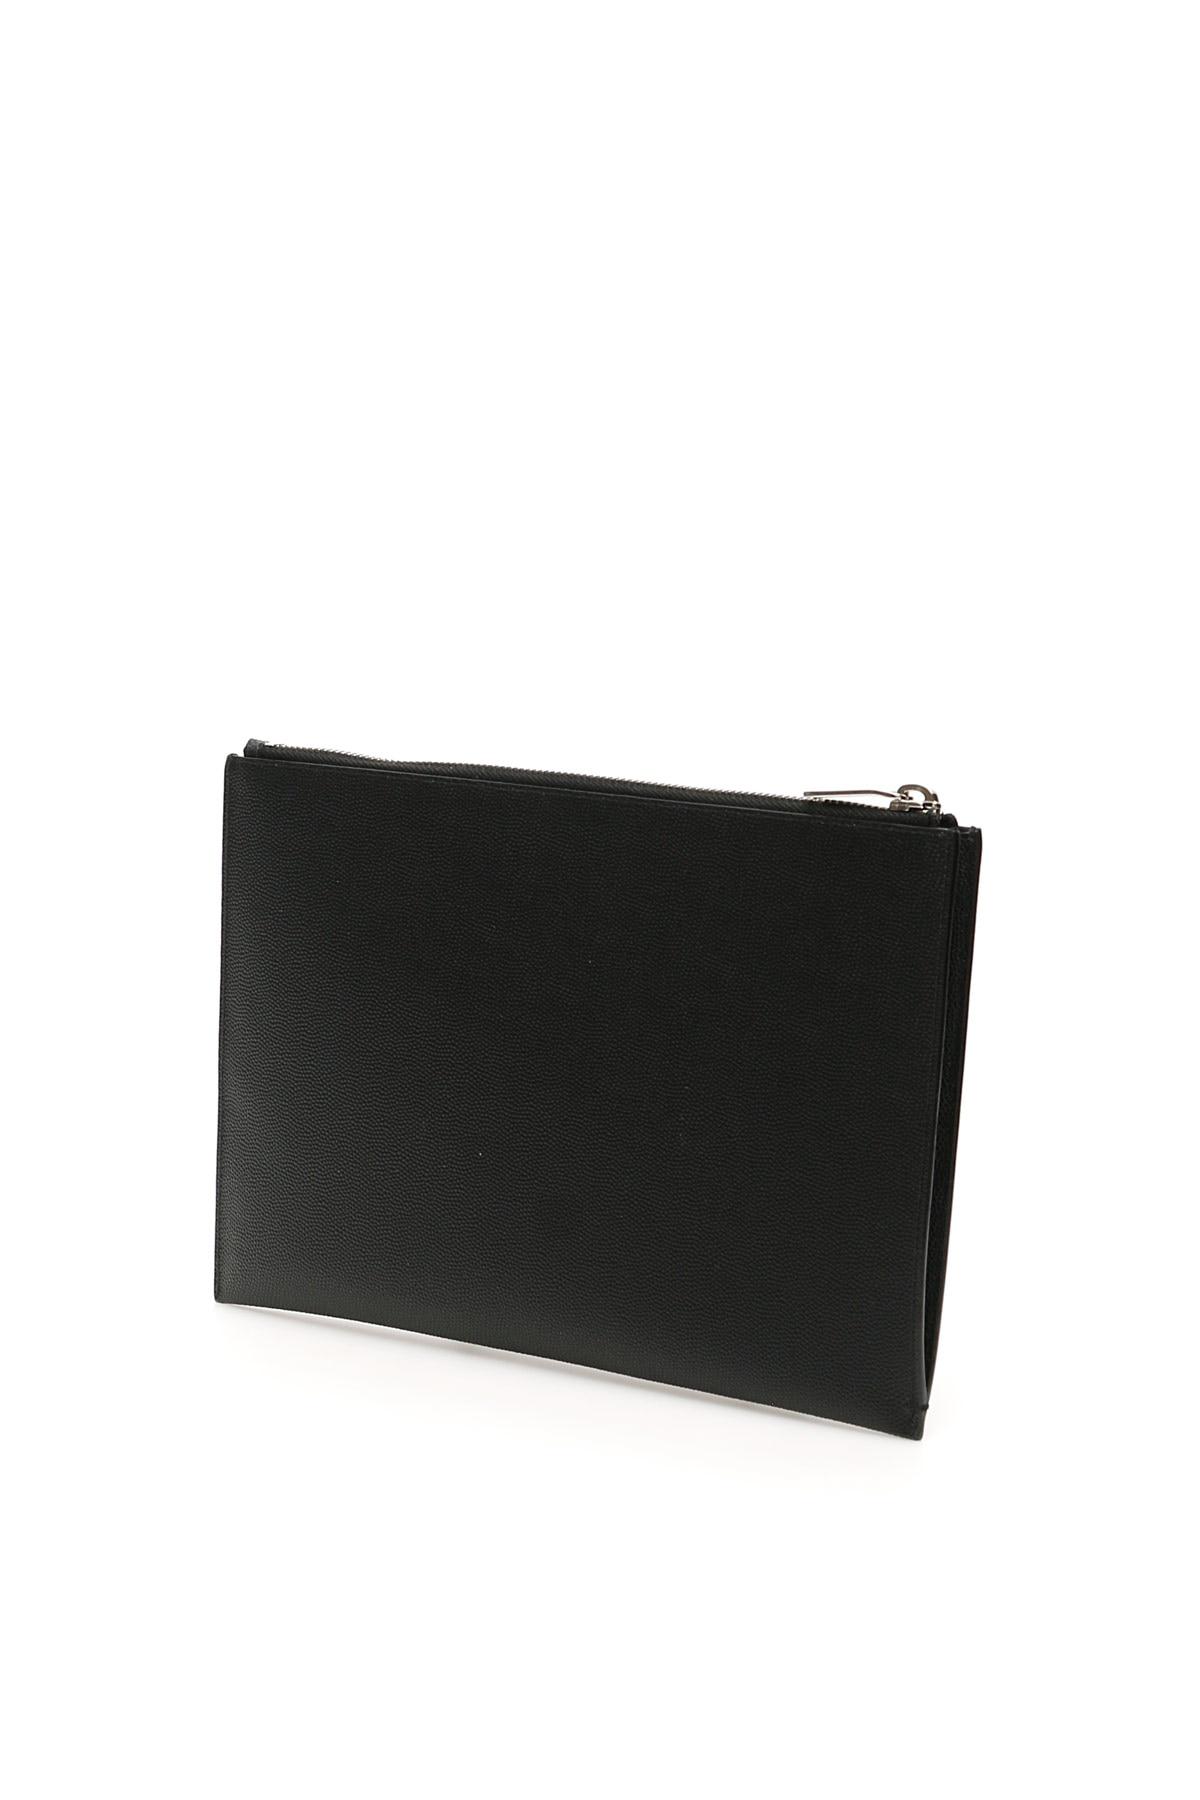 YSL iPad Mini 4 Cases Leather Brown :: YSL iPad Mini 4 Cases Covers Sleeve  Coque Fundas Capa Para